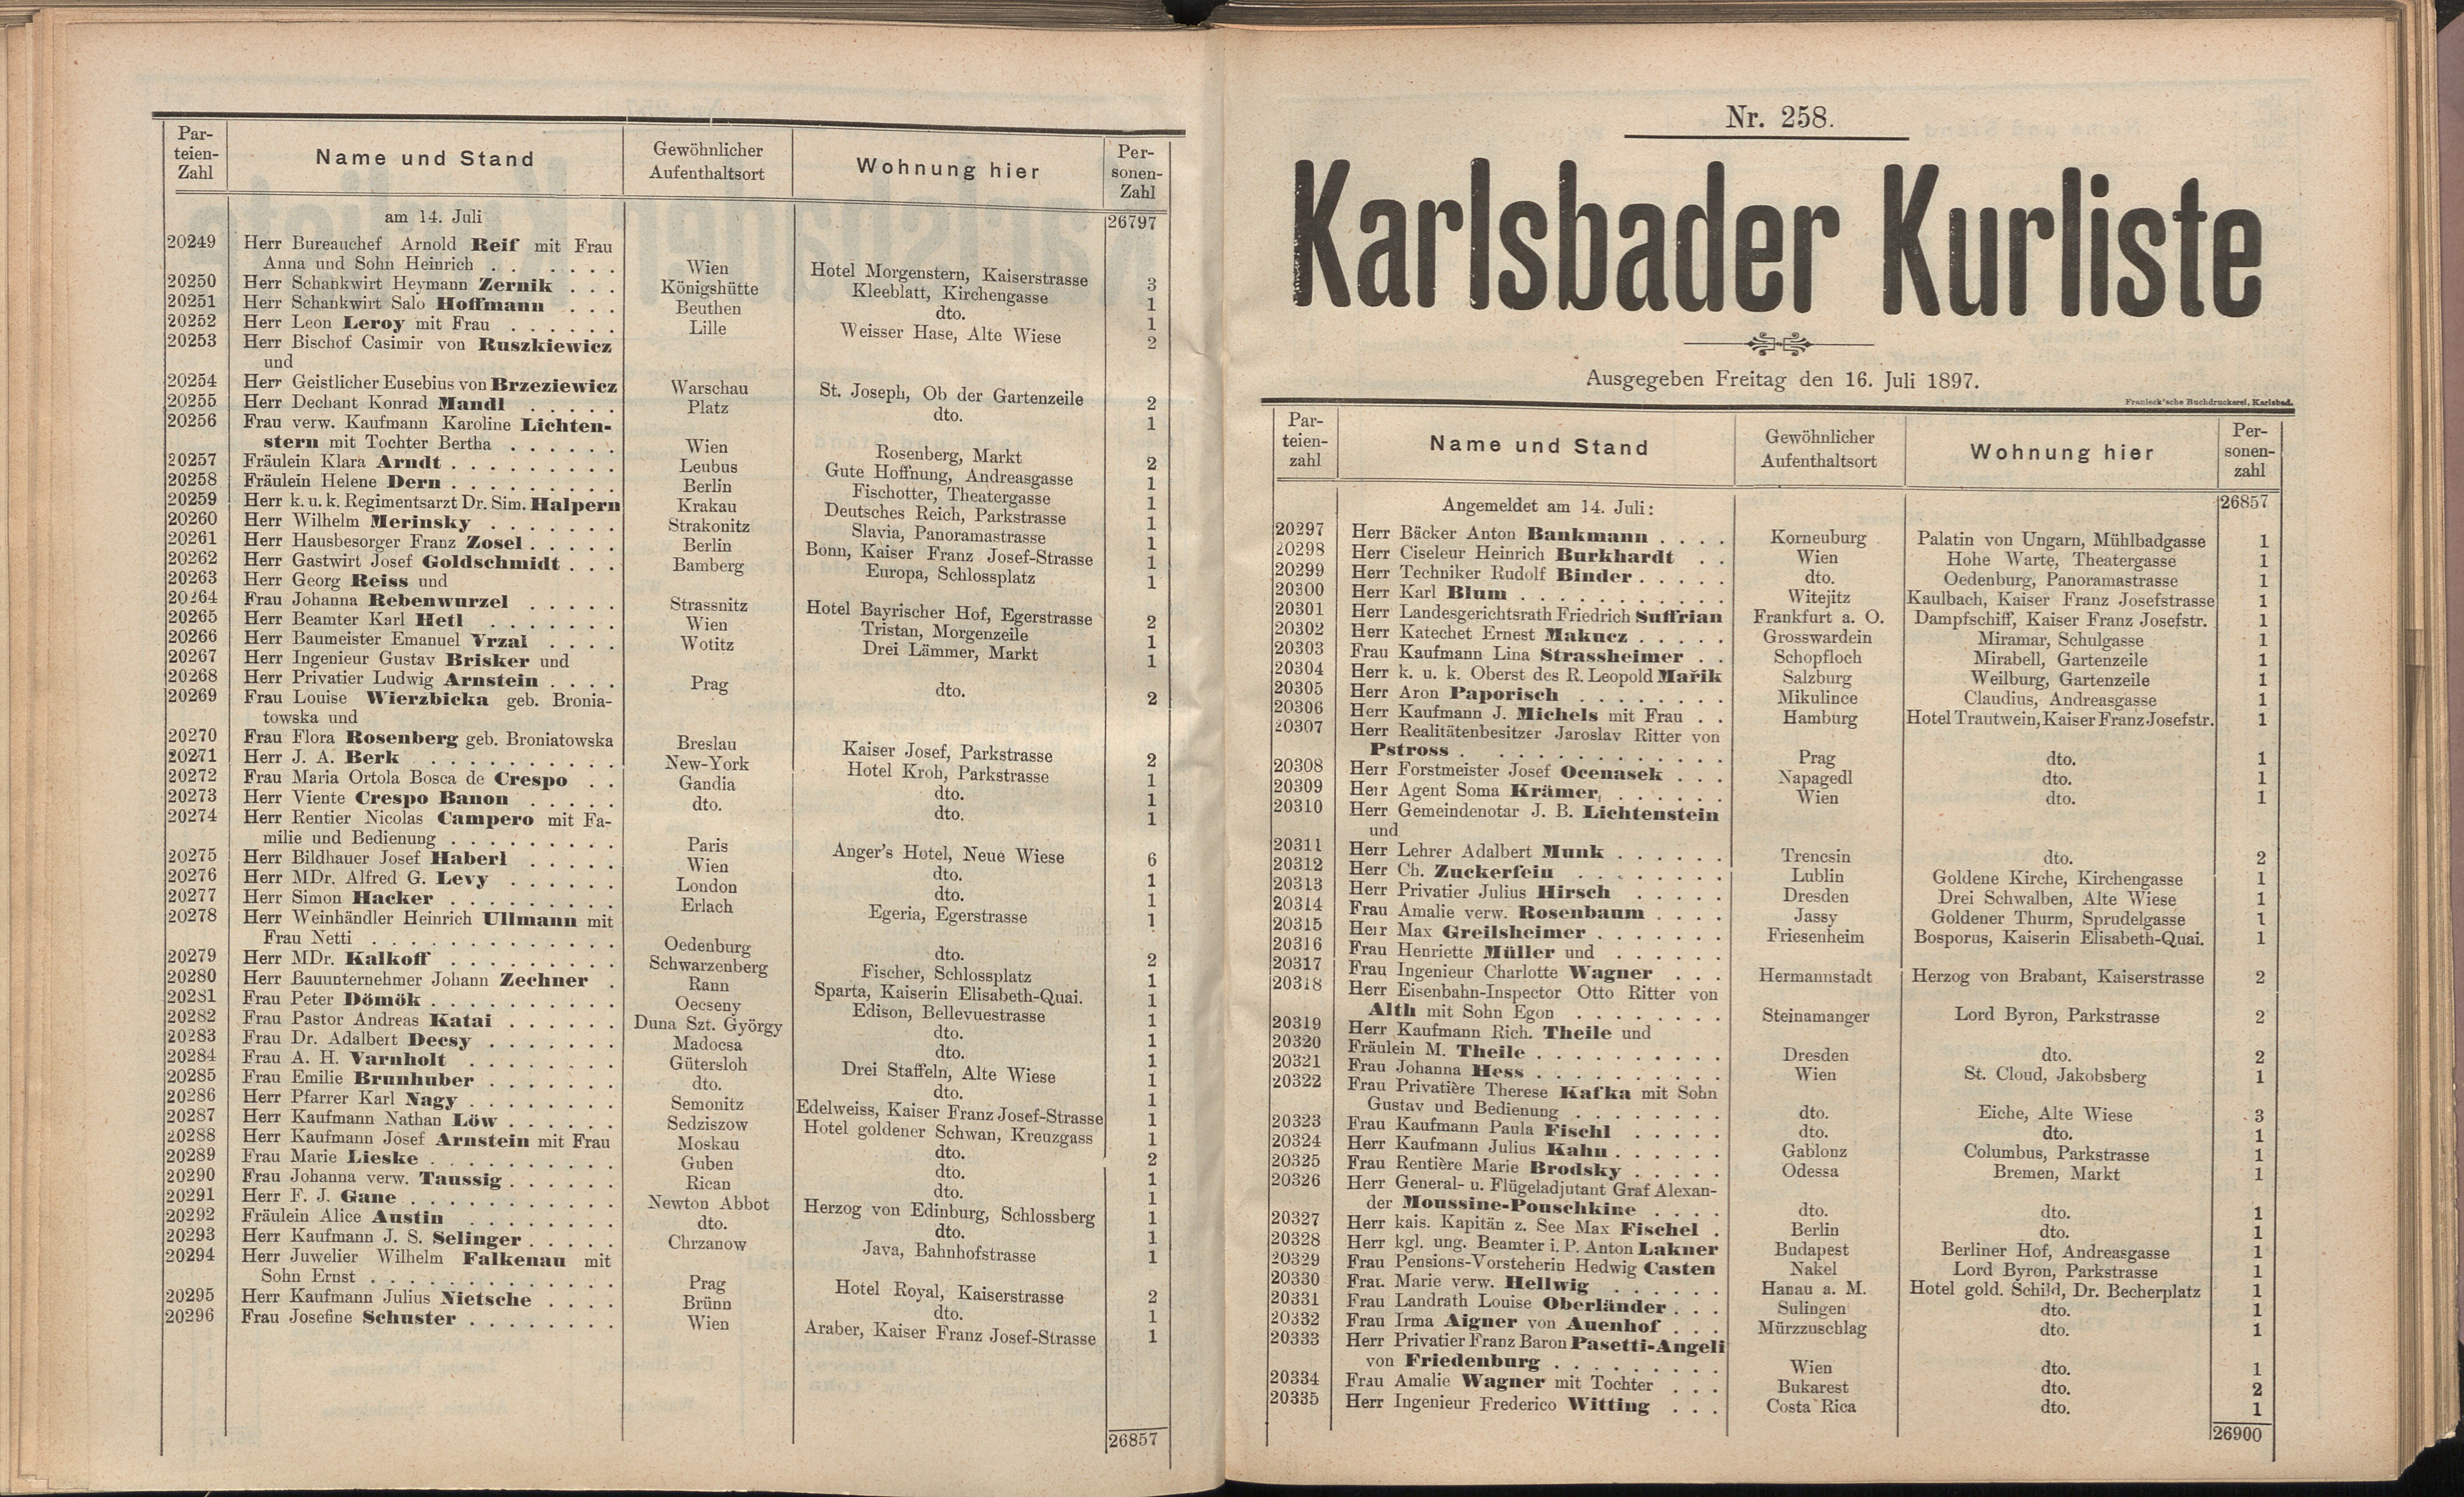 277. soap-kv_knihovna_karlsbader-kurliste-1897_2780